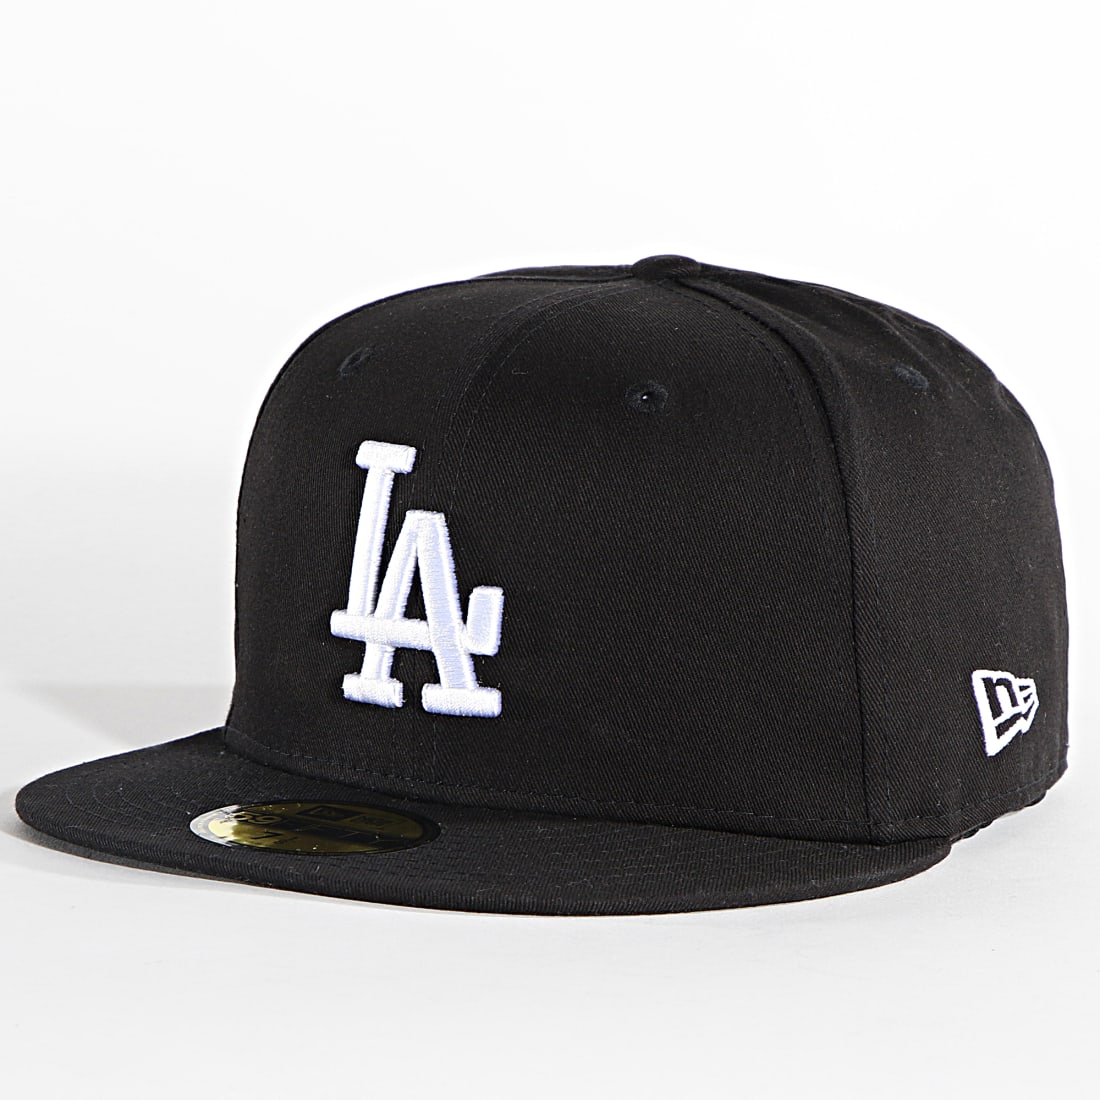 Acheter la casquette New Era side patch des Dodgers - Brooklyn Fizz